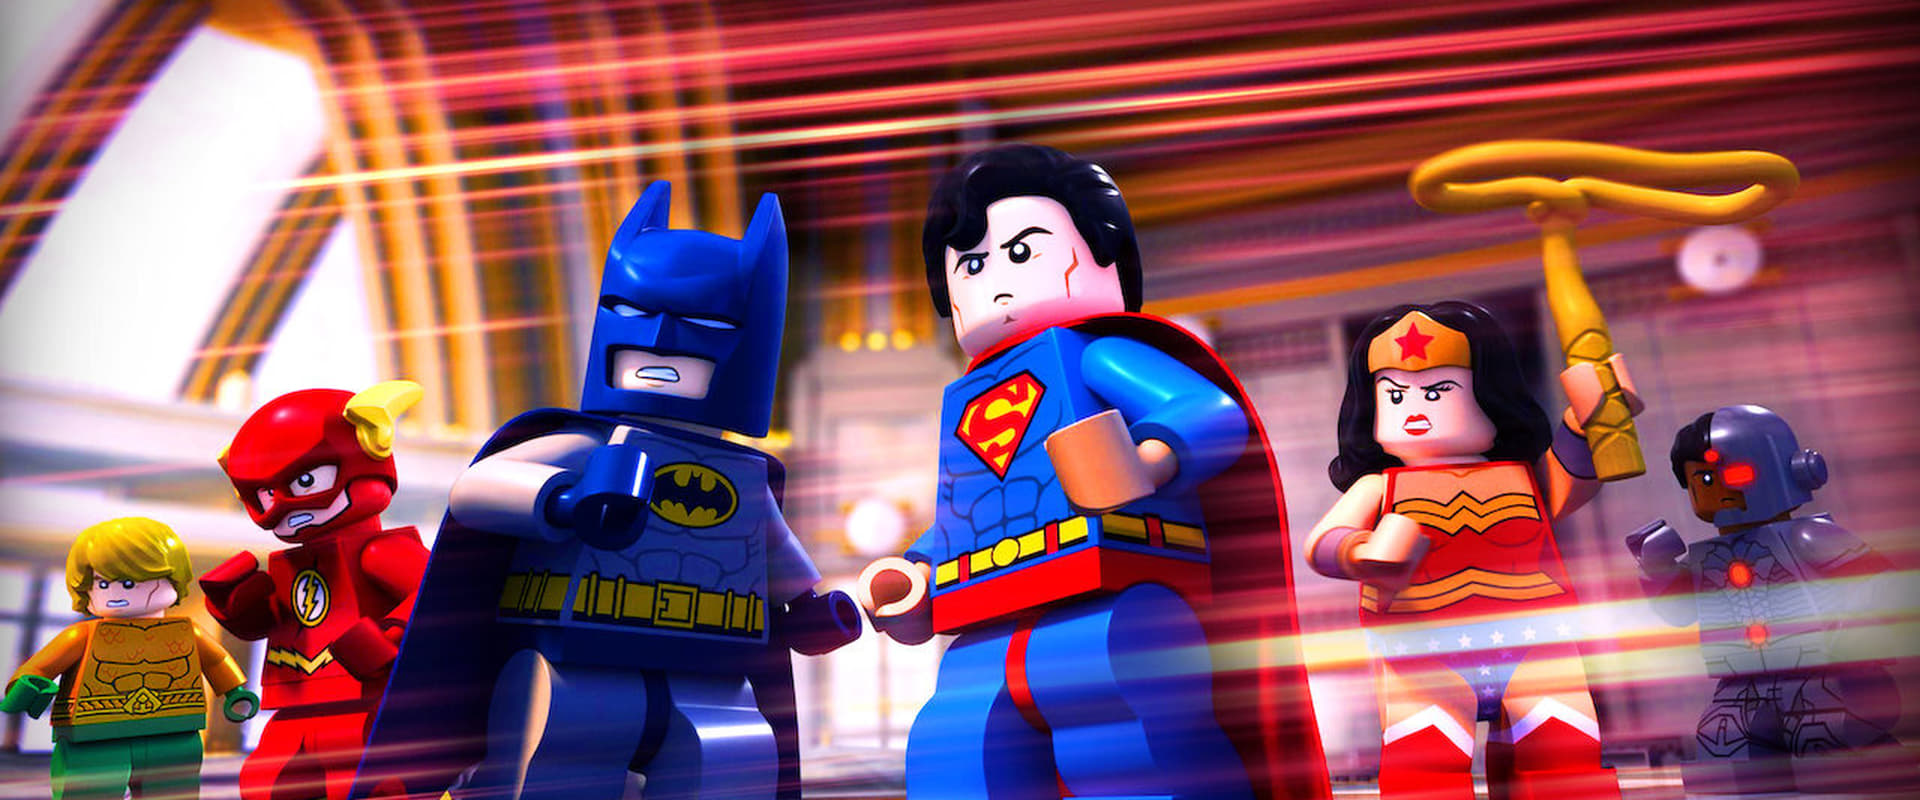 LEGO DC Comics Super Heroes Batman Be-Leaguered